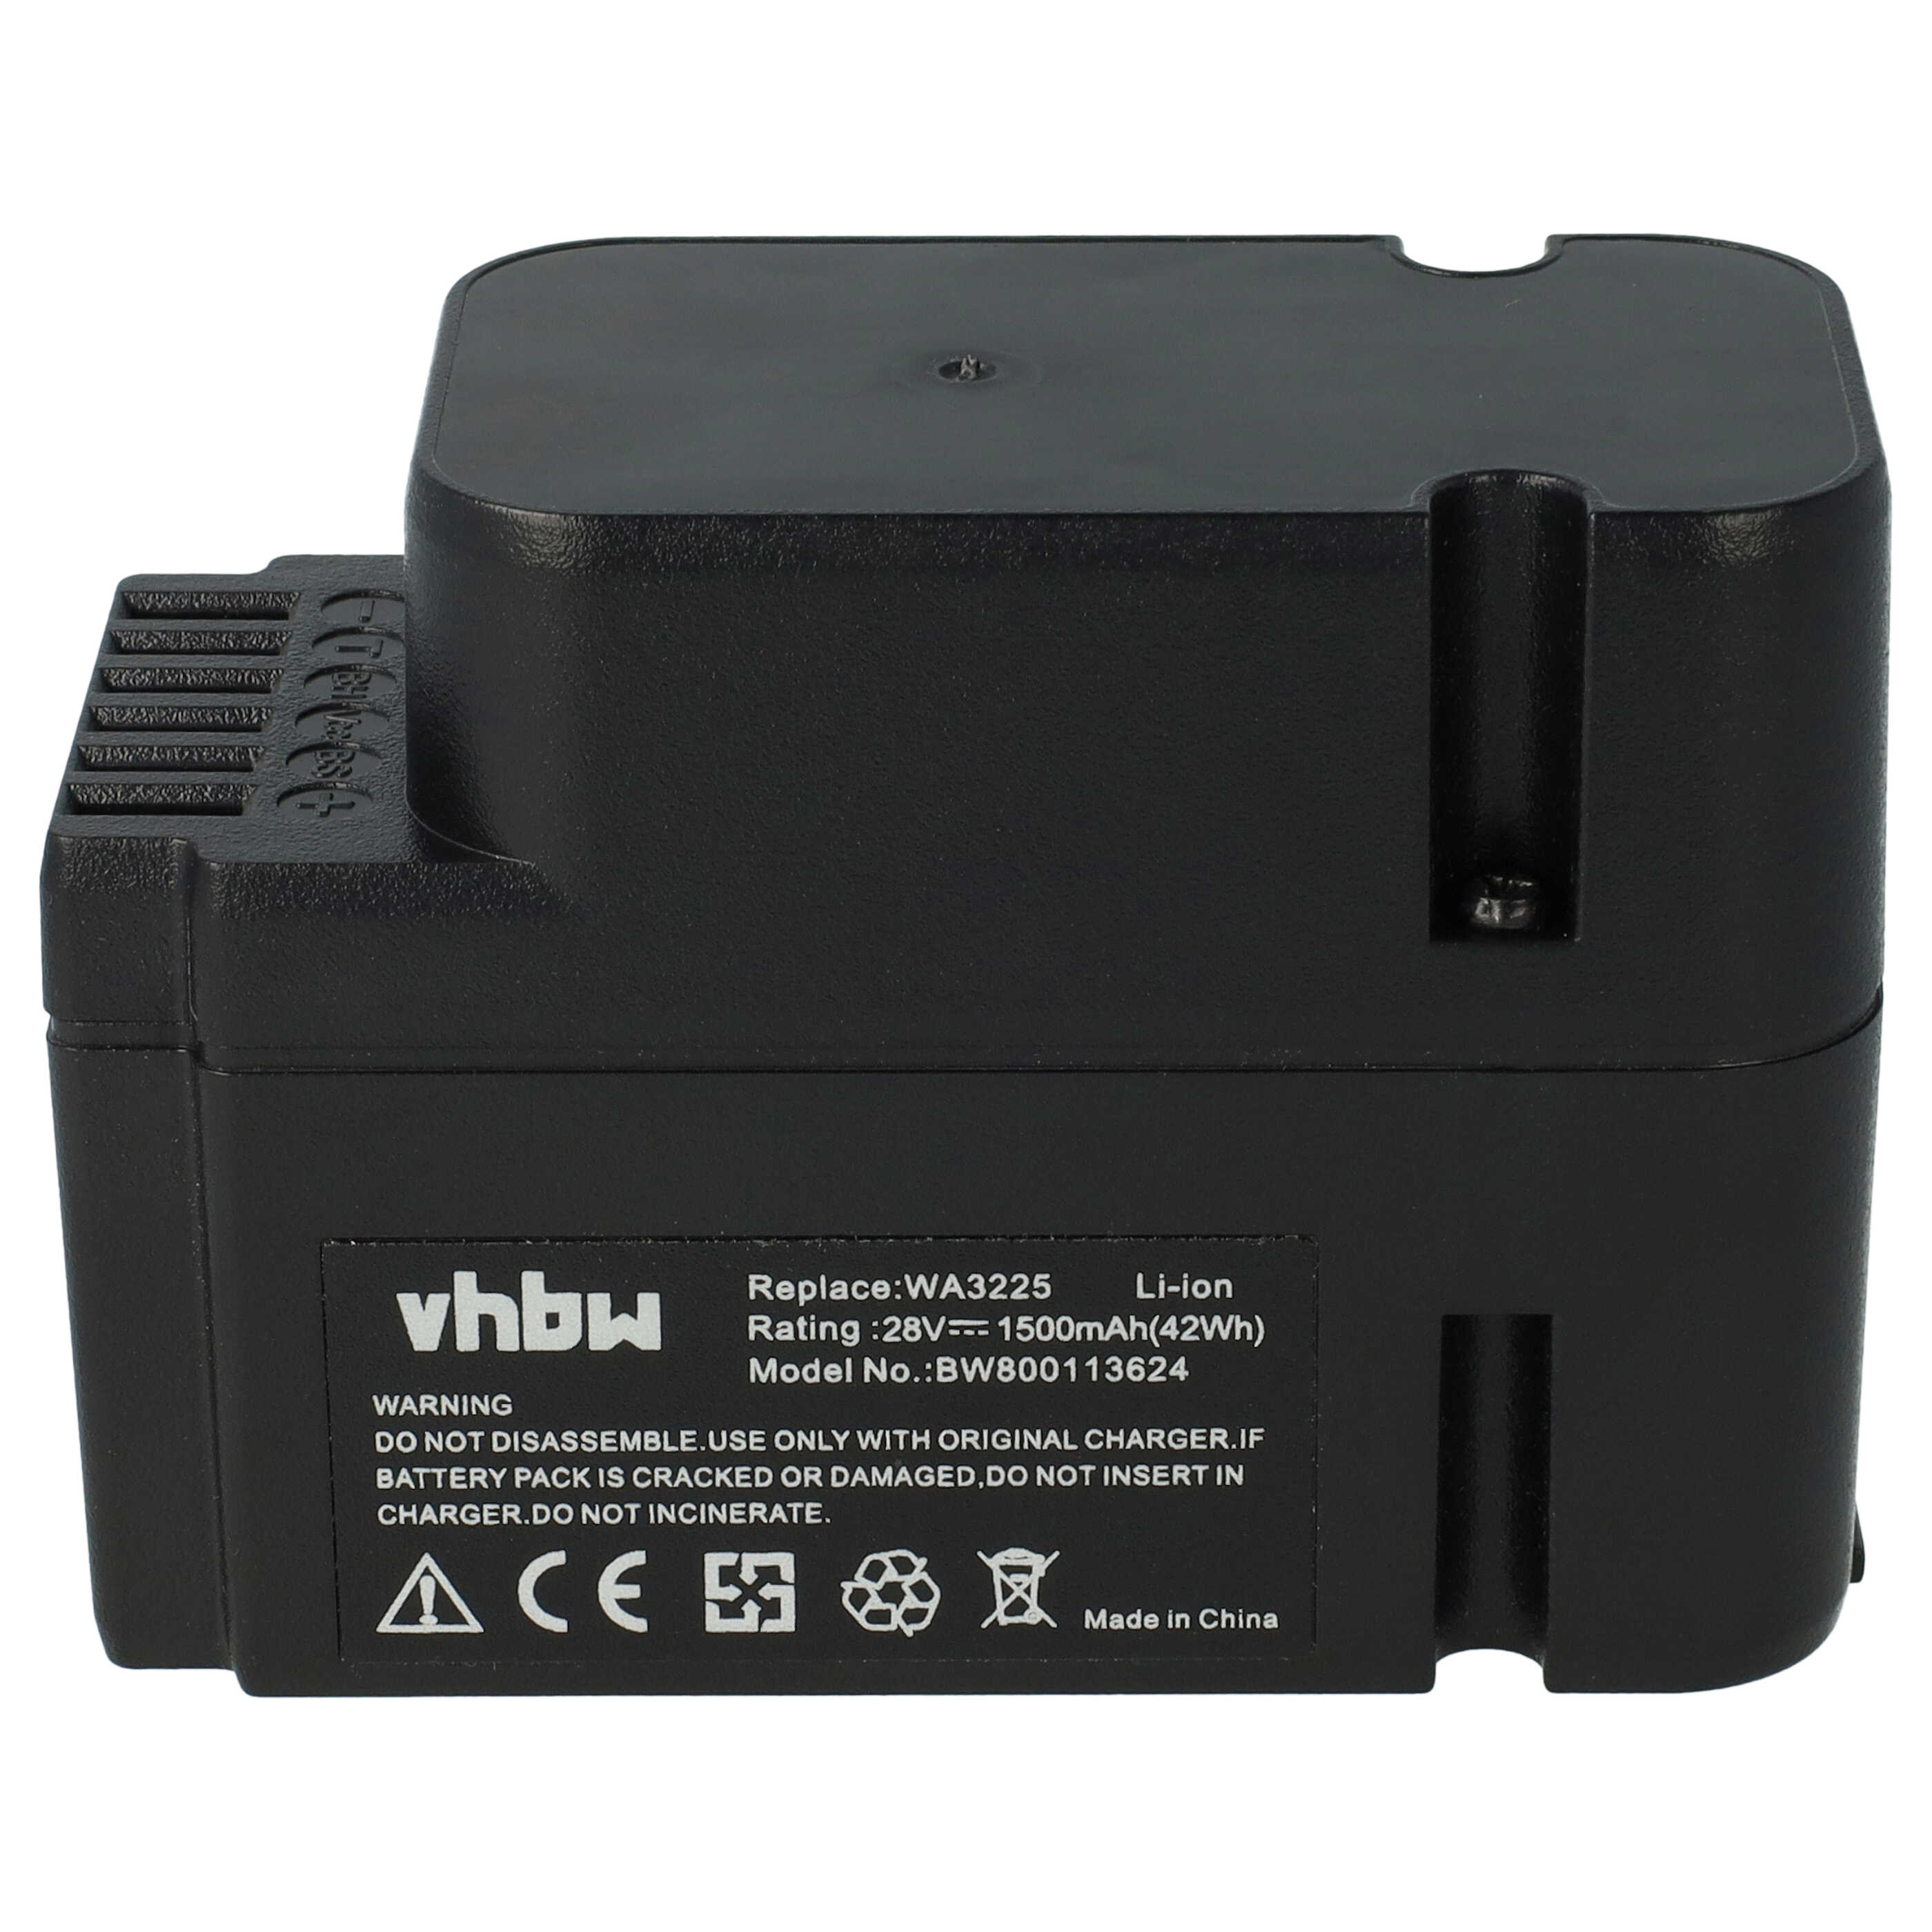 Lawnmower Battery Replacement for Worx WA3226, WA3225, WA3565 - 1500mAh 28V Li-Ion, black